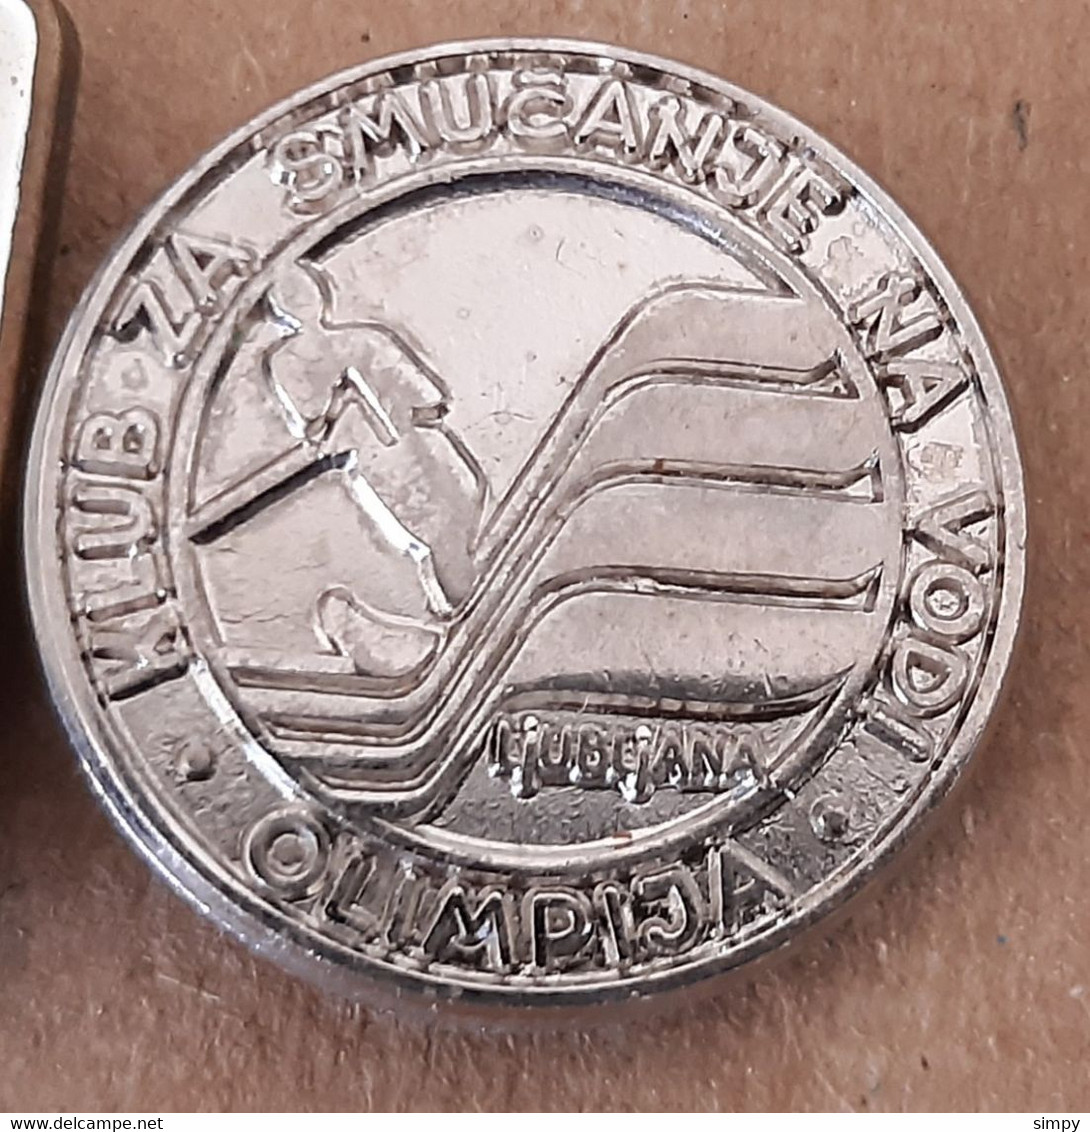 Water Skiing Club Olimpija Ljubljana Vintage Slovenia Ex Yugoslavia Badge Pin - Waterski